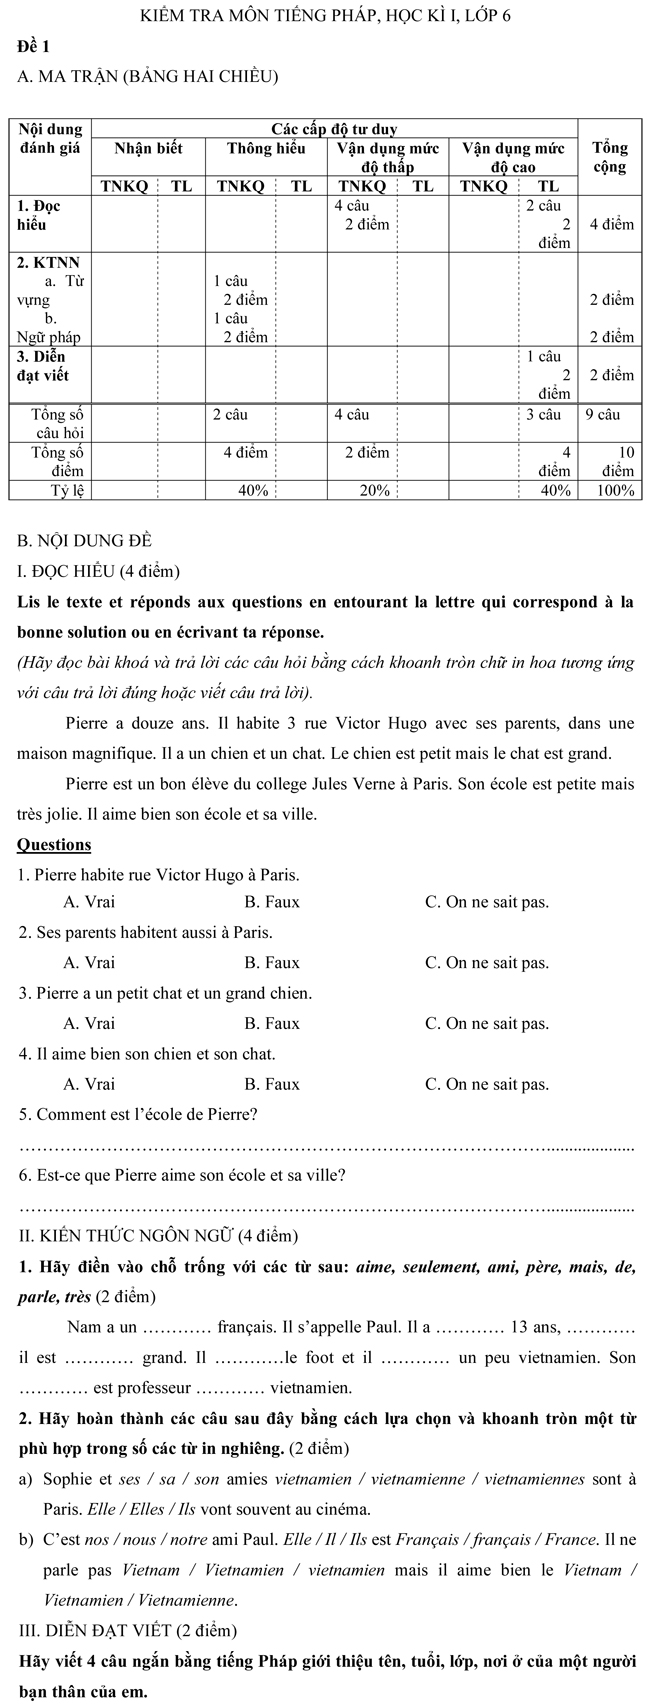 Đề kiểm tra học kì I lớp 6 môn tiếng Pháp – Đề số 1 Đề kiểm tra tiếng Pháp